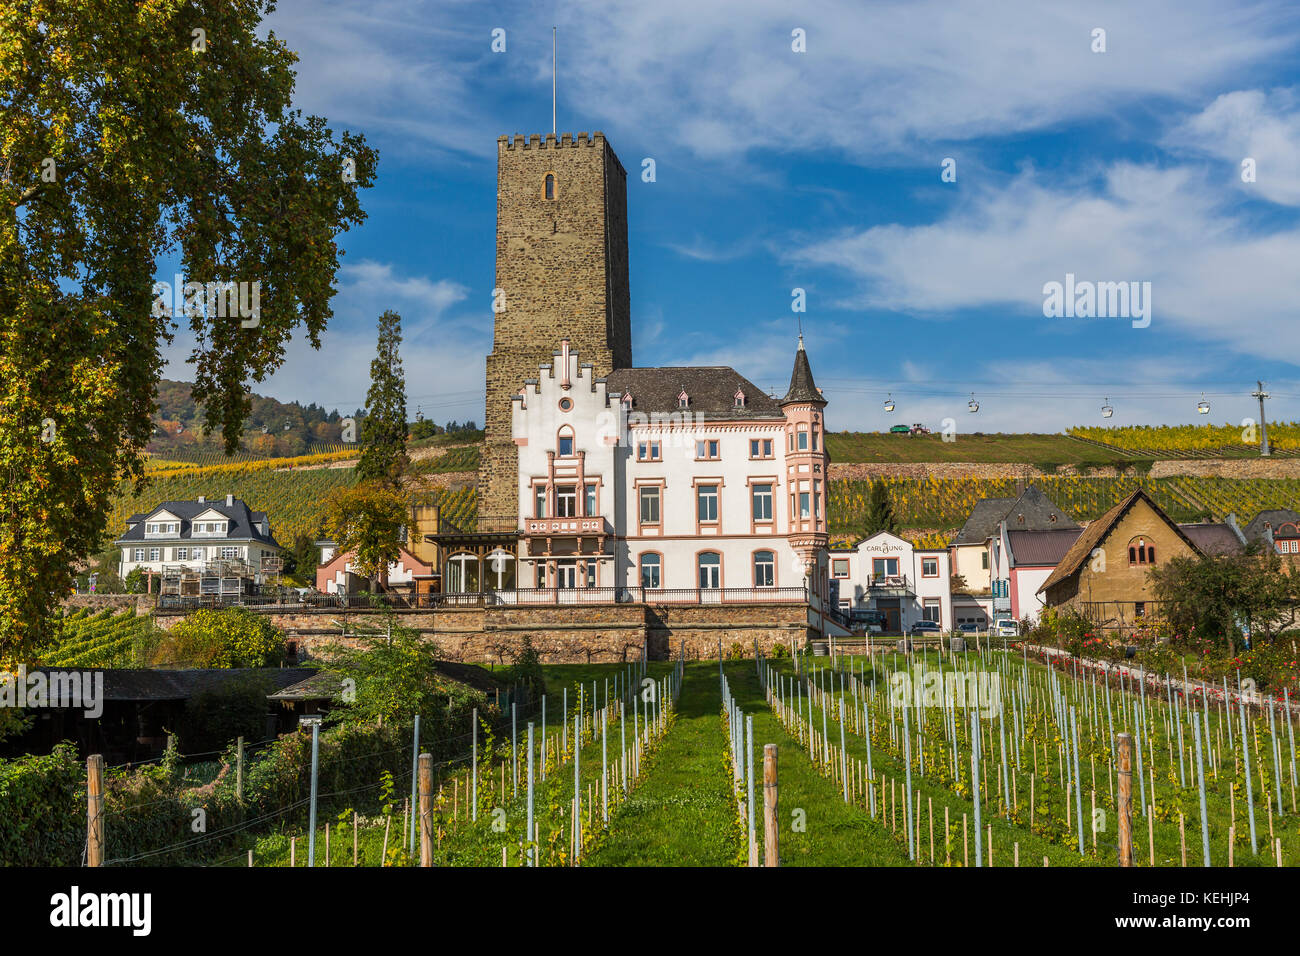 Boosenburg castle Rüdesheim am Rhein, wine making town in Germany Stock Photo